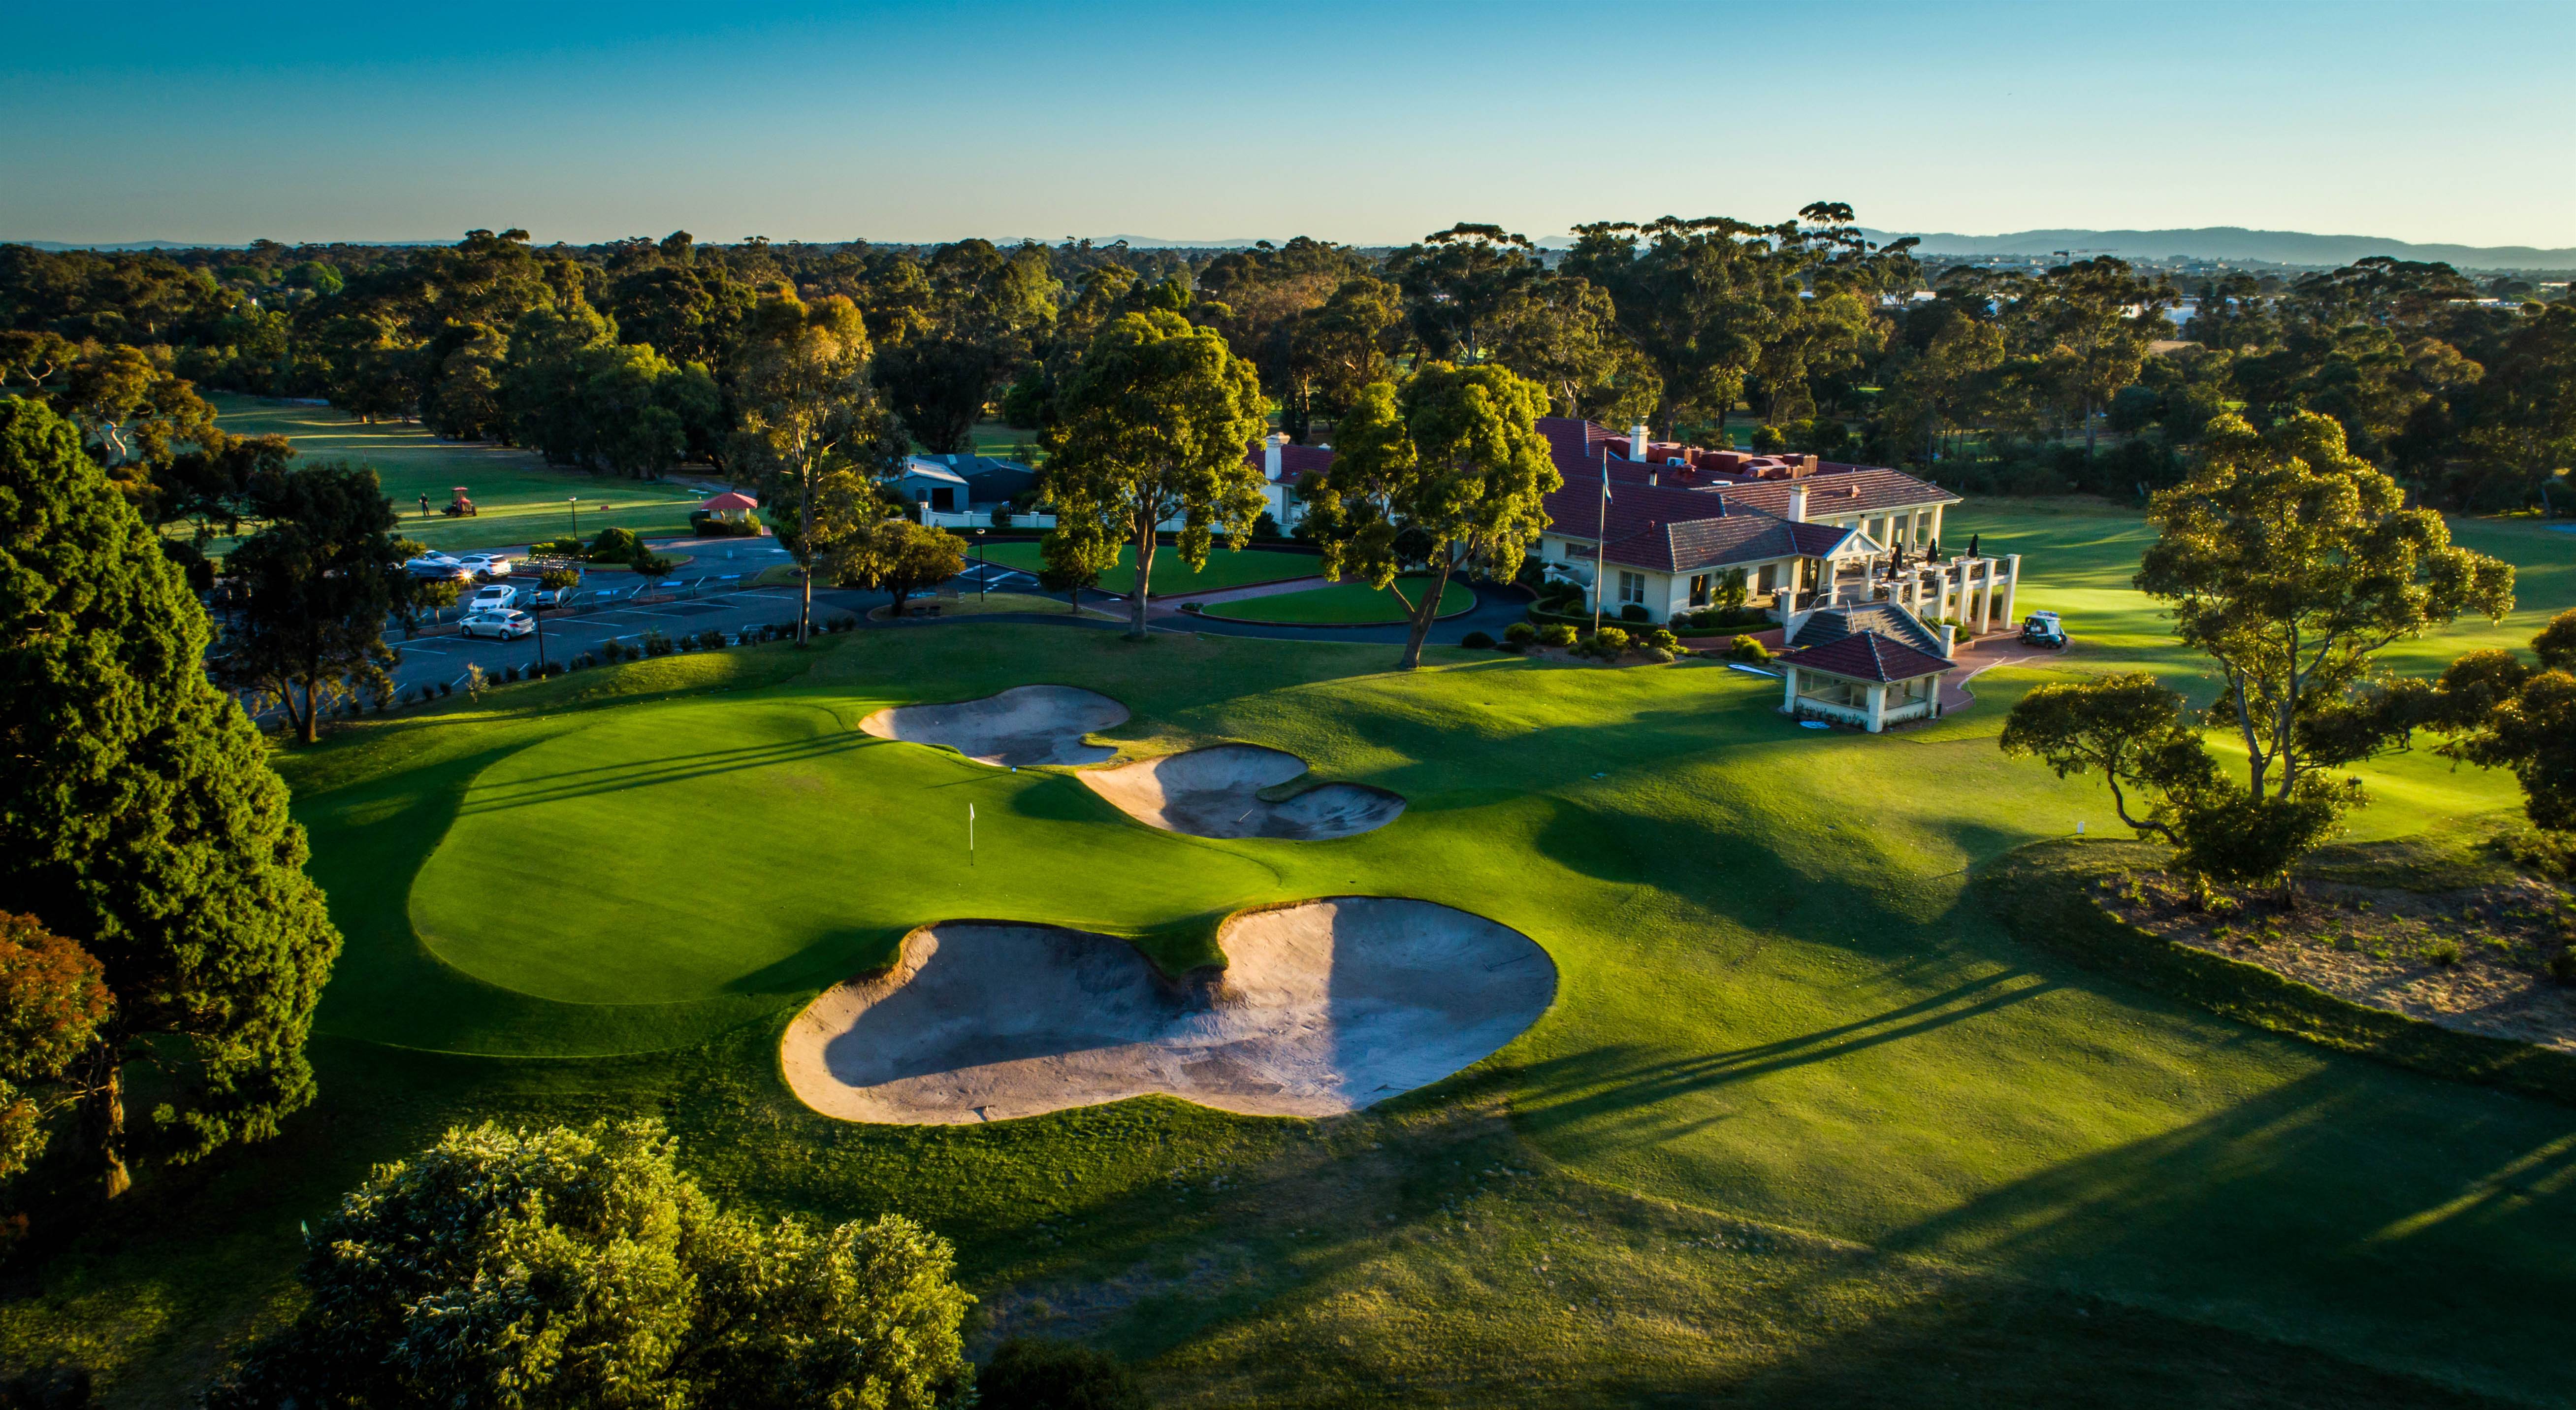 golf tour companies australia